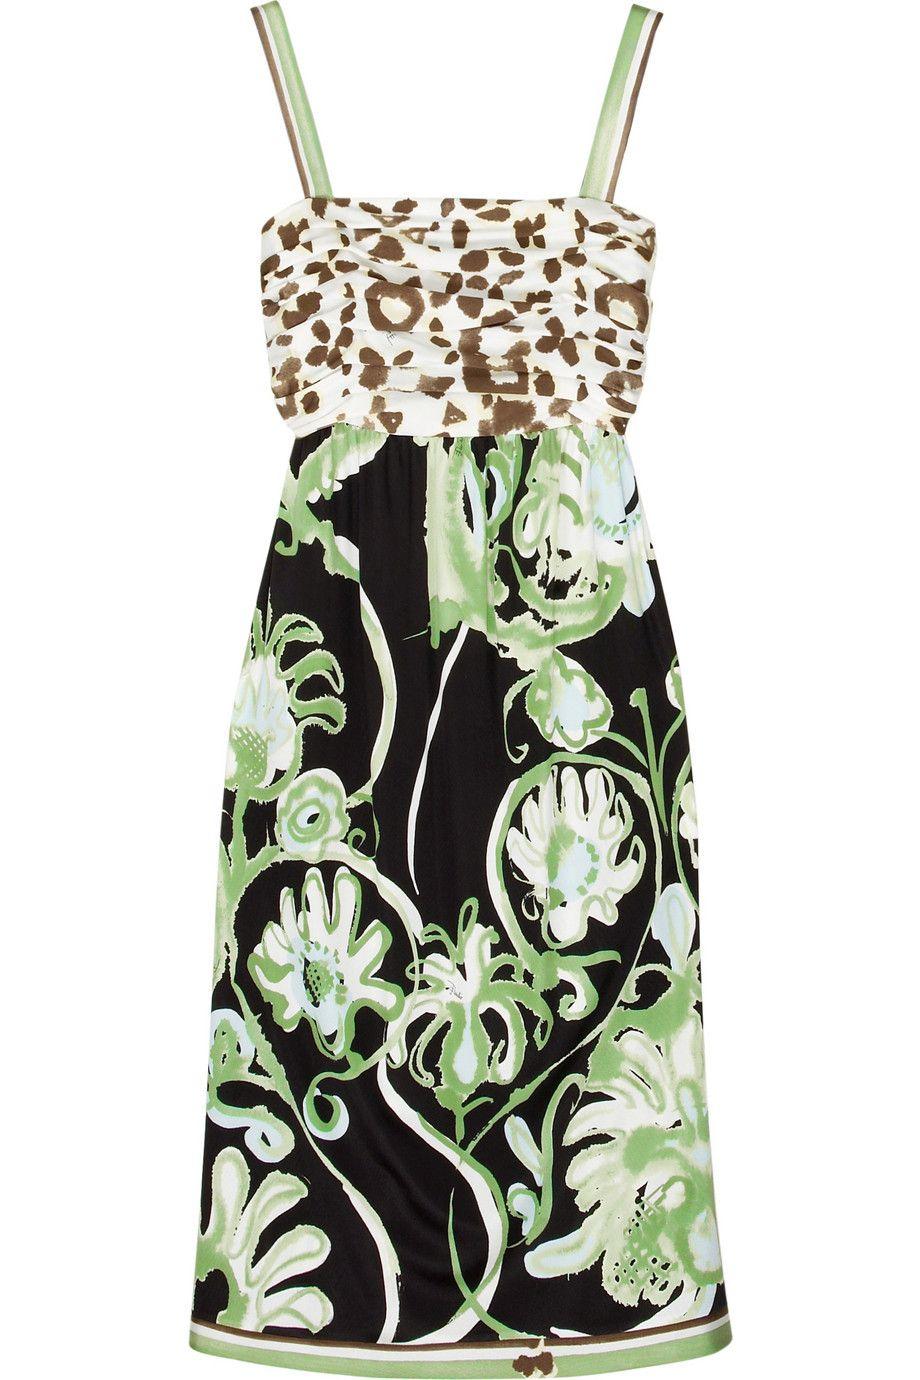 UNWORN Emilio Pucci Silk Jersey Jungle Cheetah Floral Botanical Print Dress 42 3